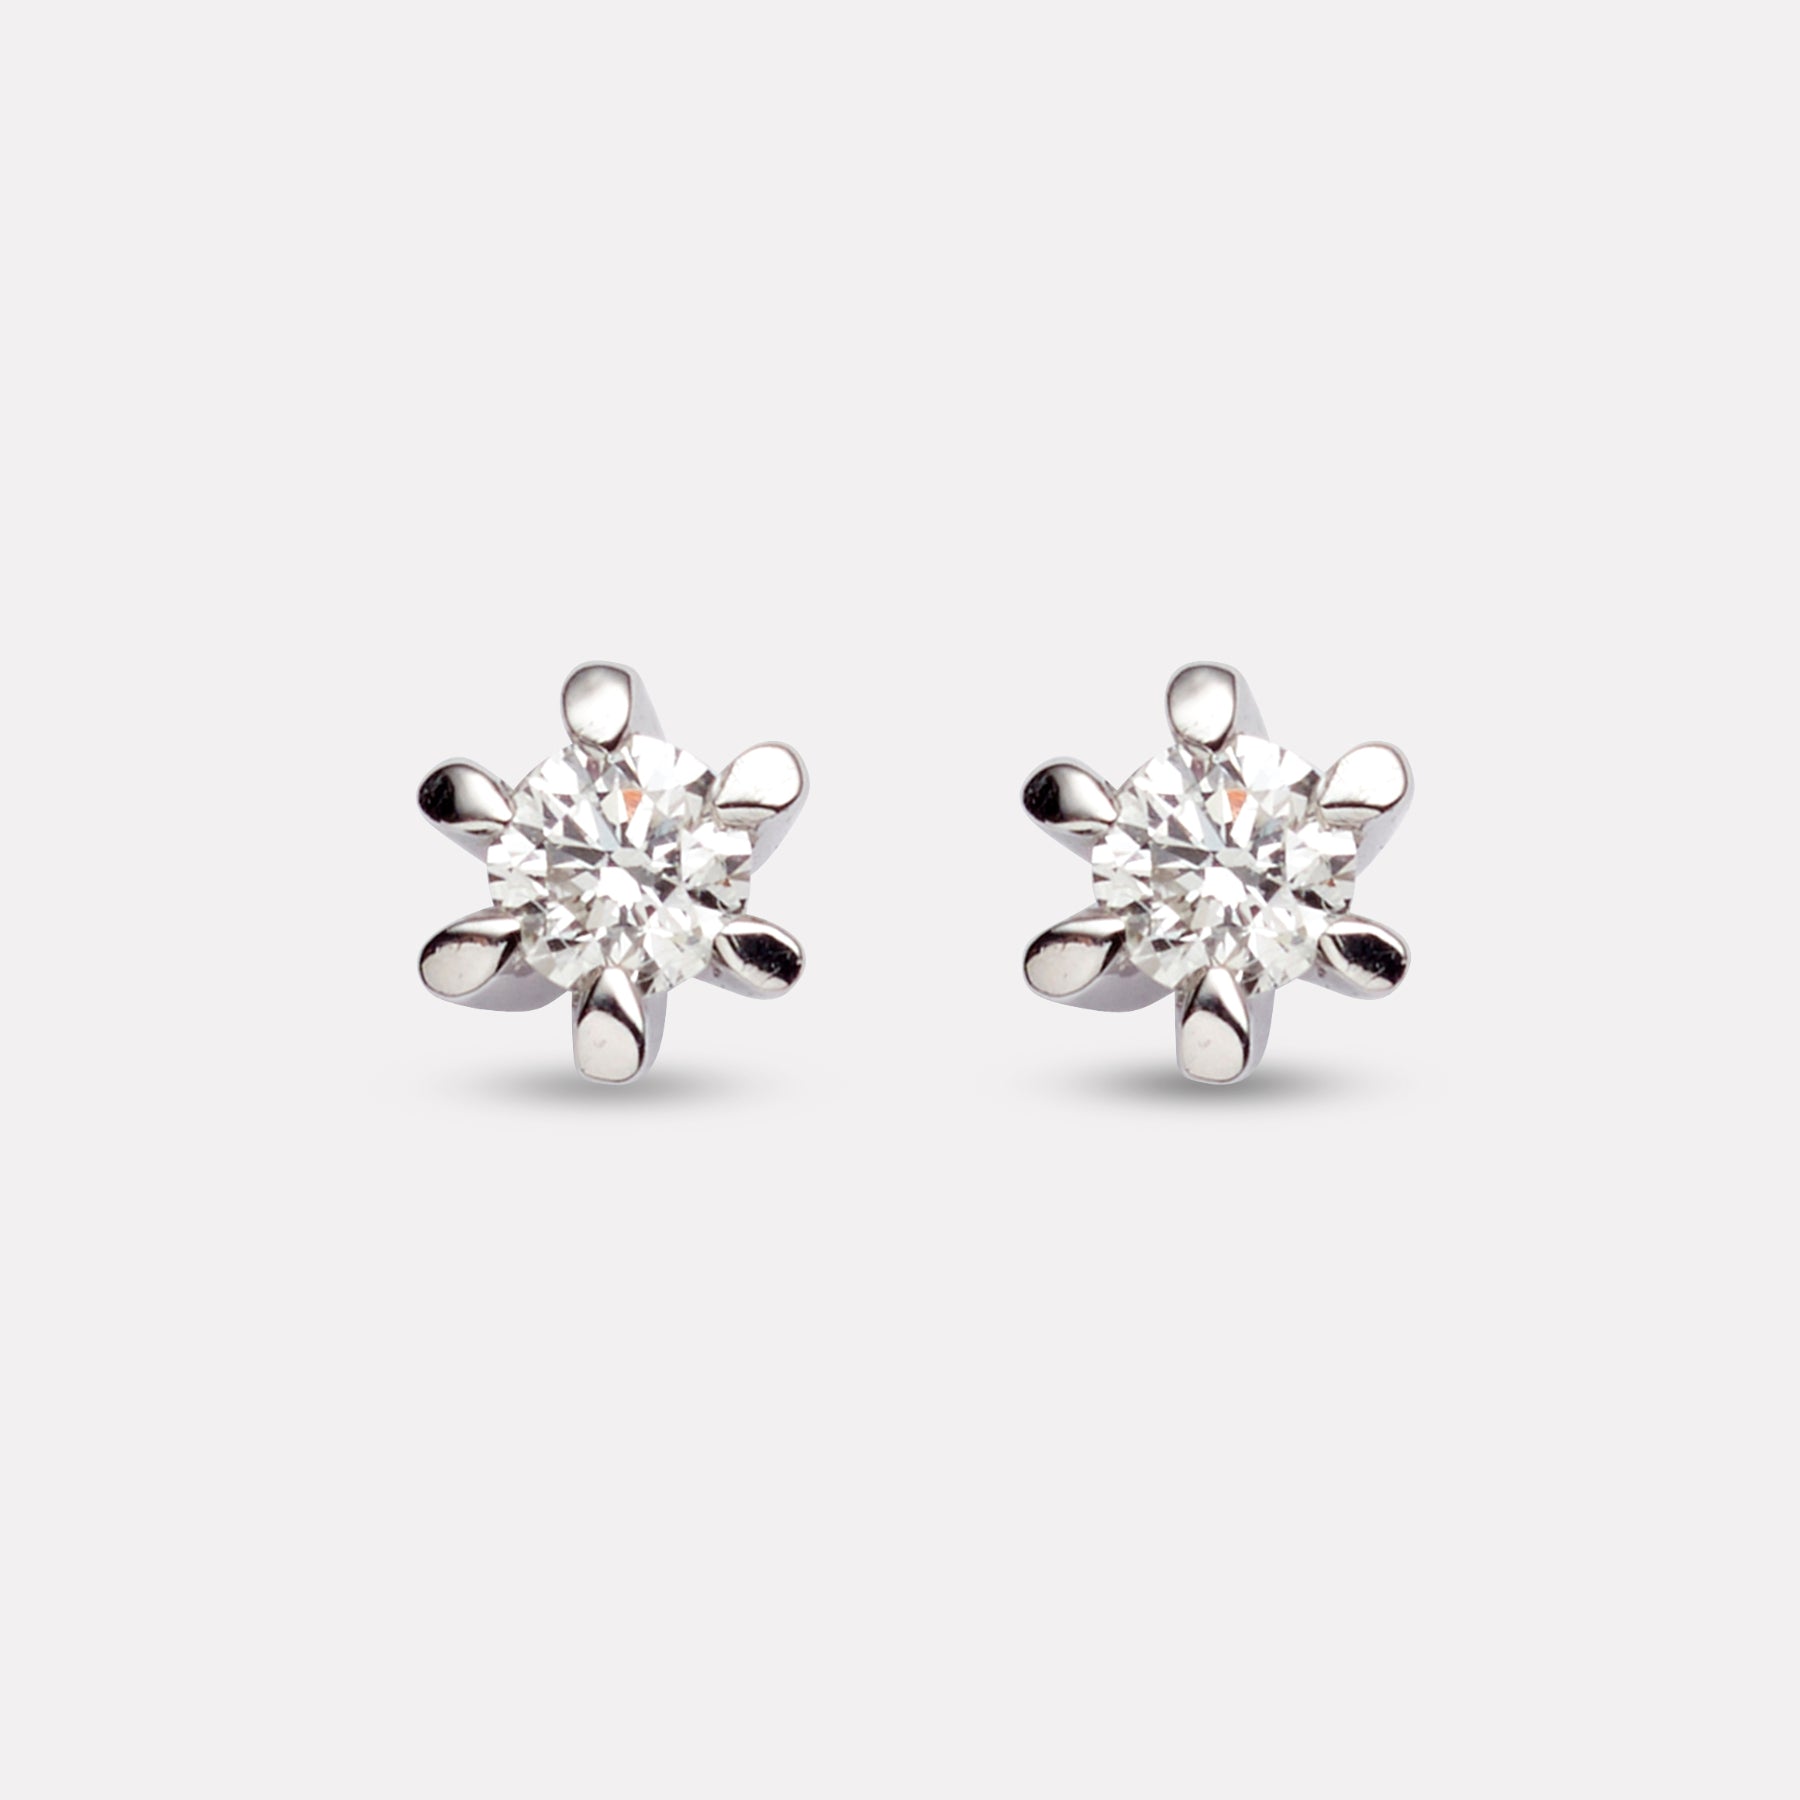 Guri earrings in white gold with diamonds